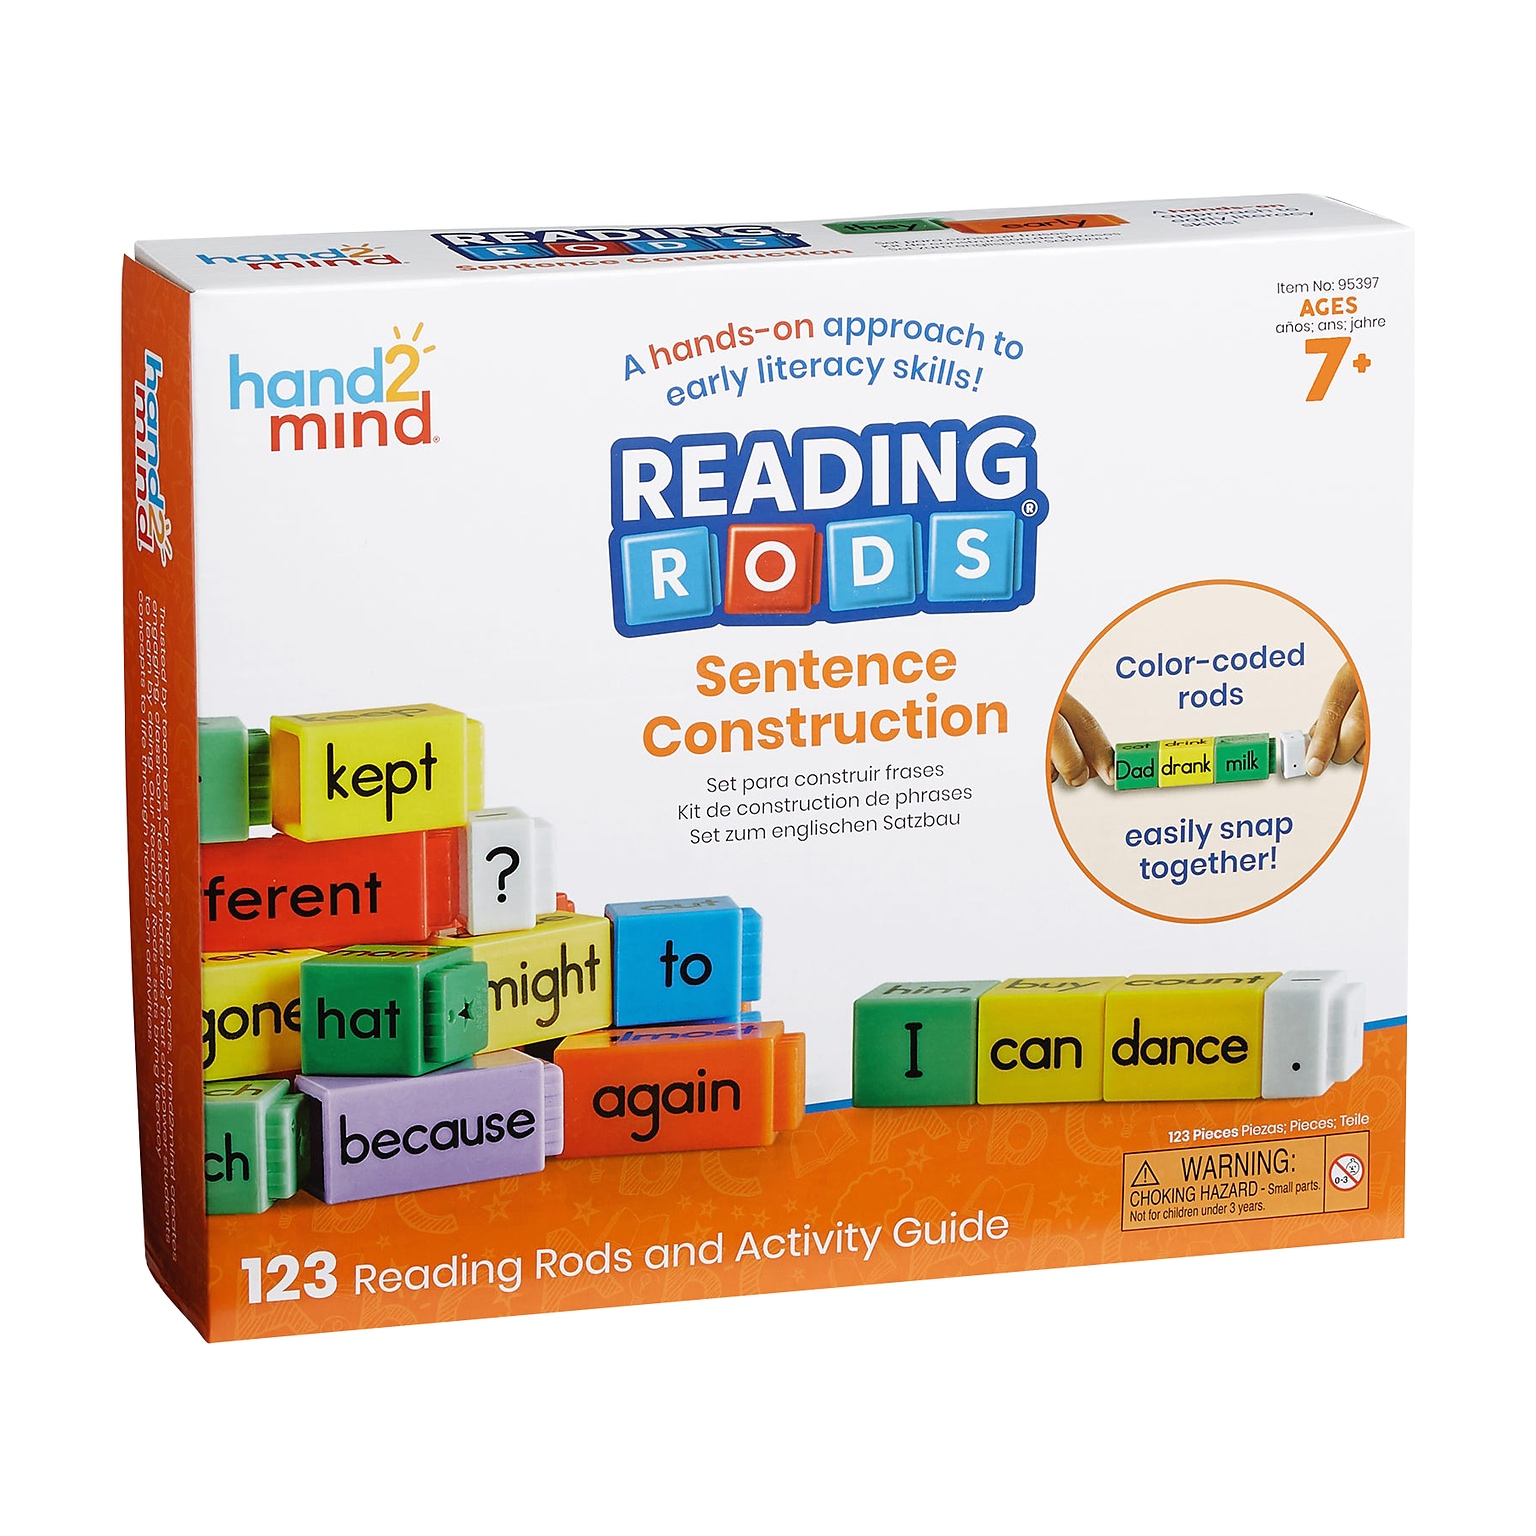 hand2mind Reading Rods Sentence Construction (95397)